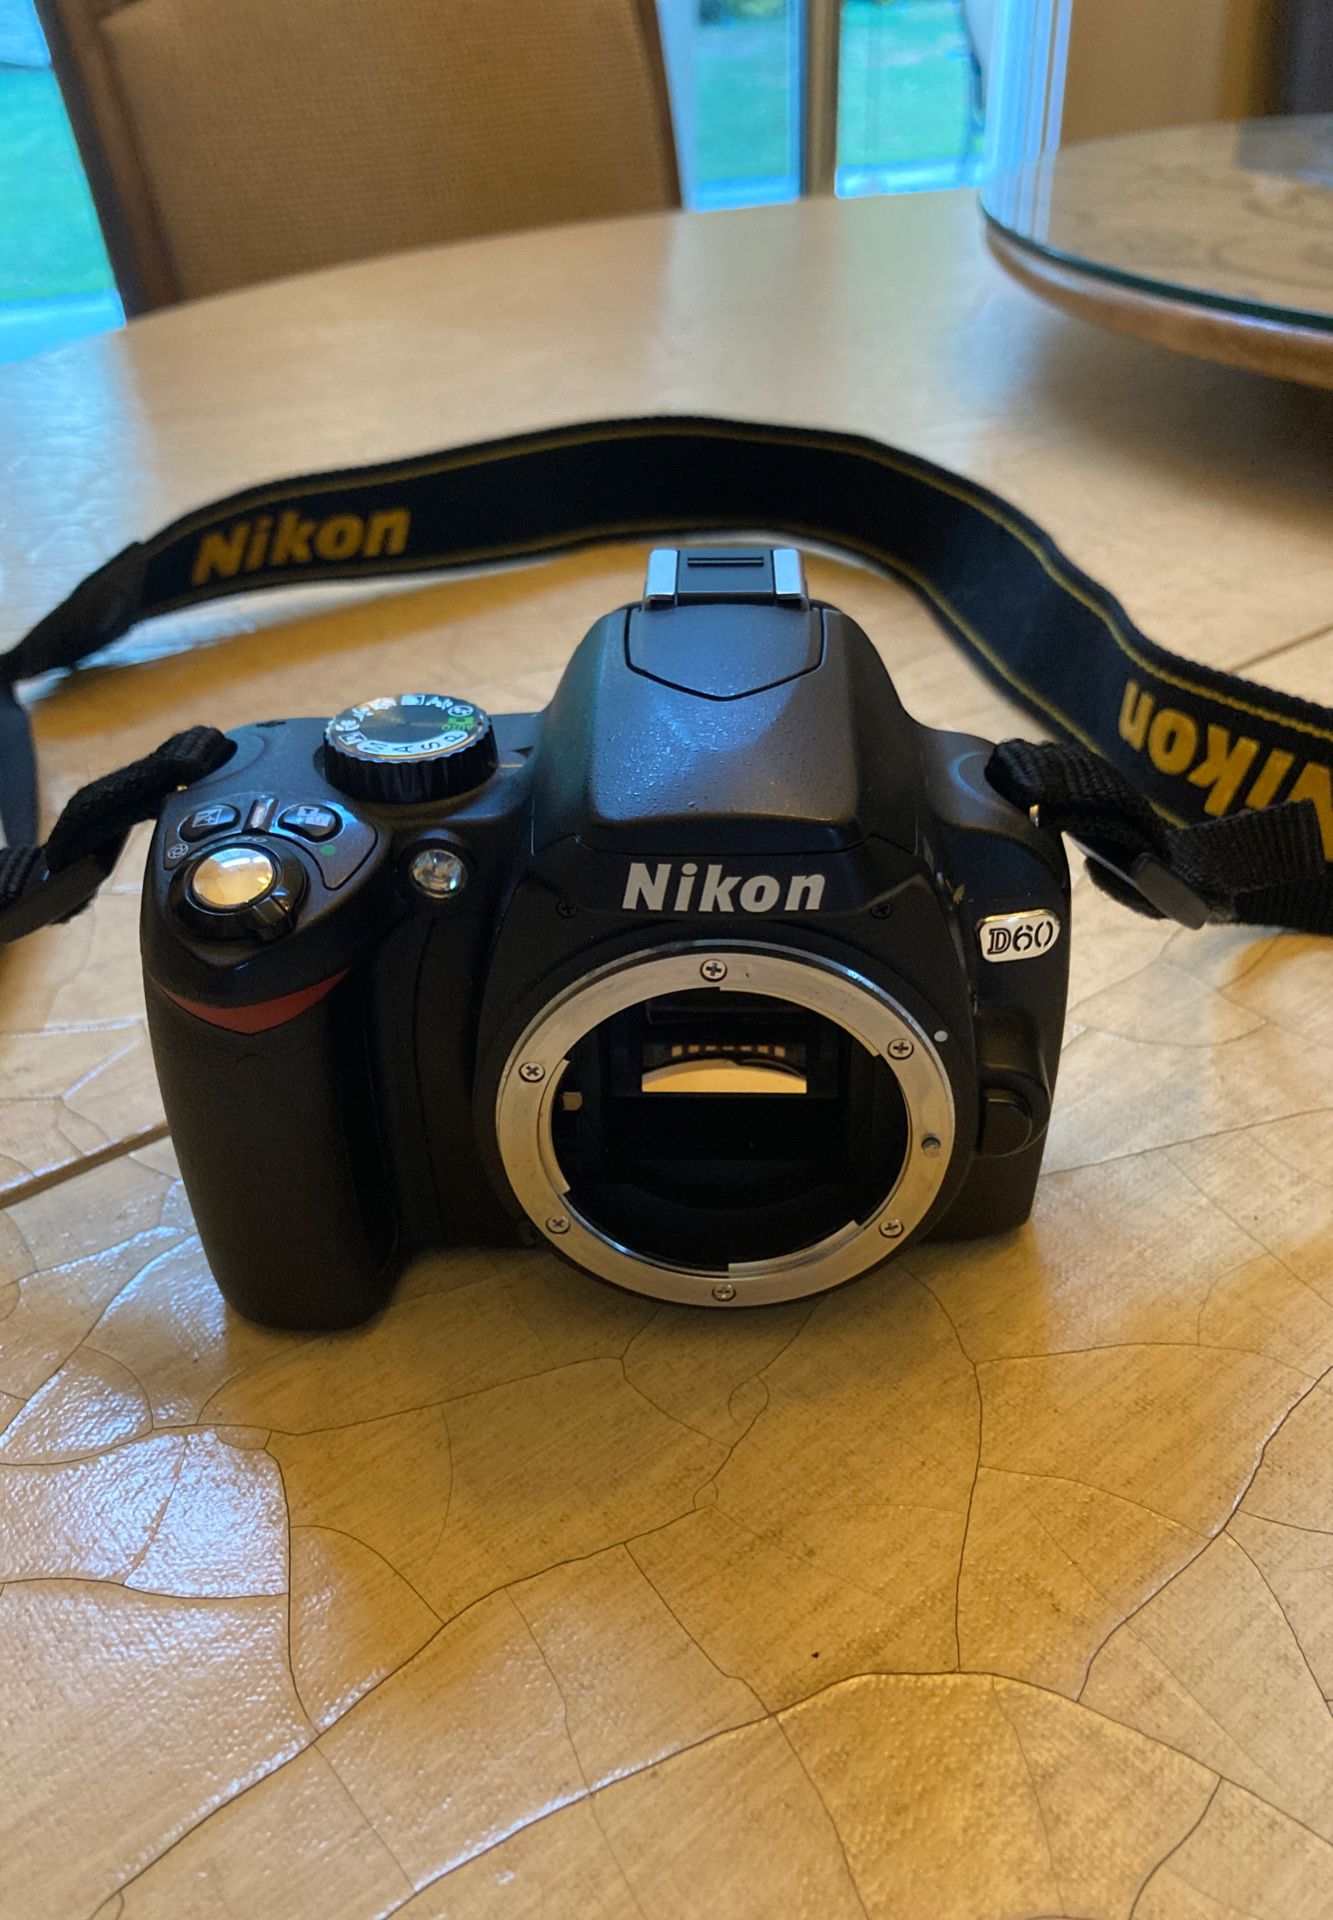 NIKON D60 camera with 2 lenses